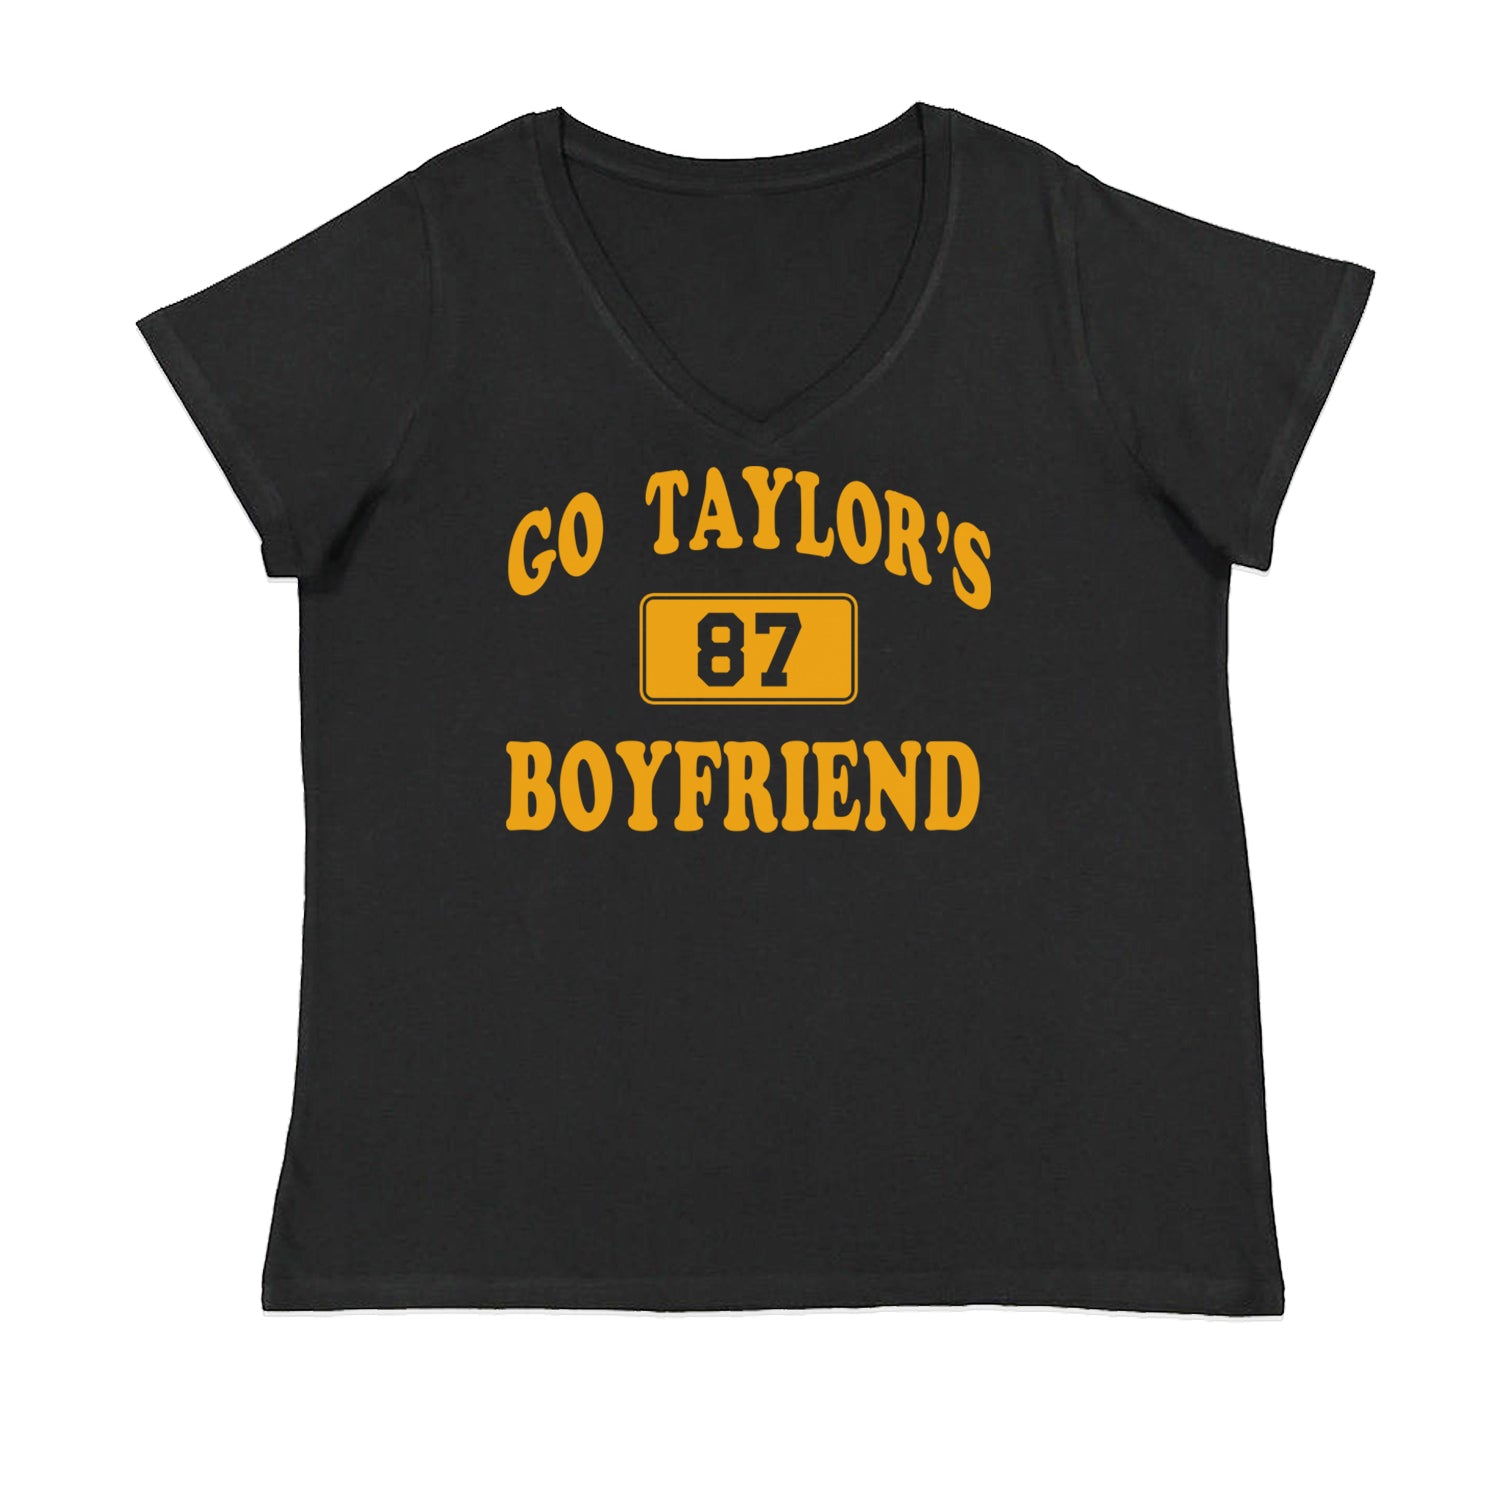 Go Taylor's Boyfriend Kansas City Womens Plus Size V-Neck T-shirt